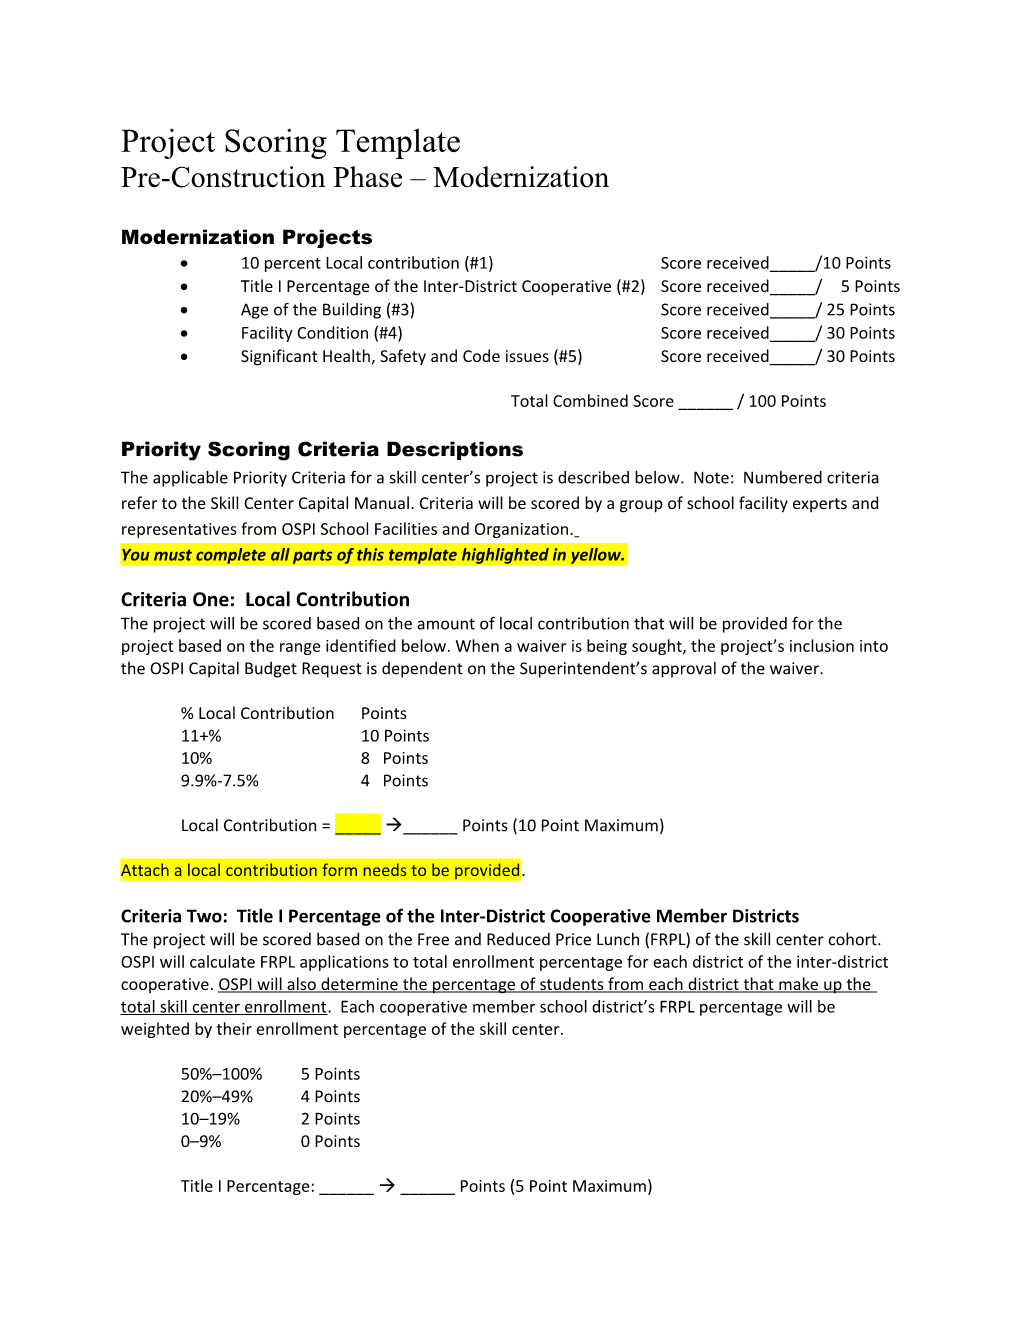 Prioritization Scoring Template Preconstruction-Modernization